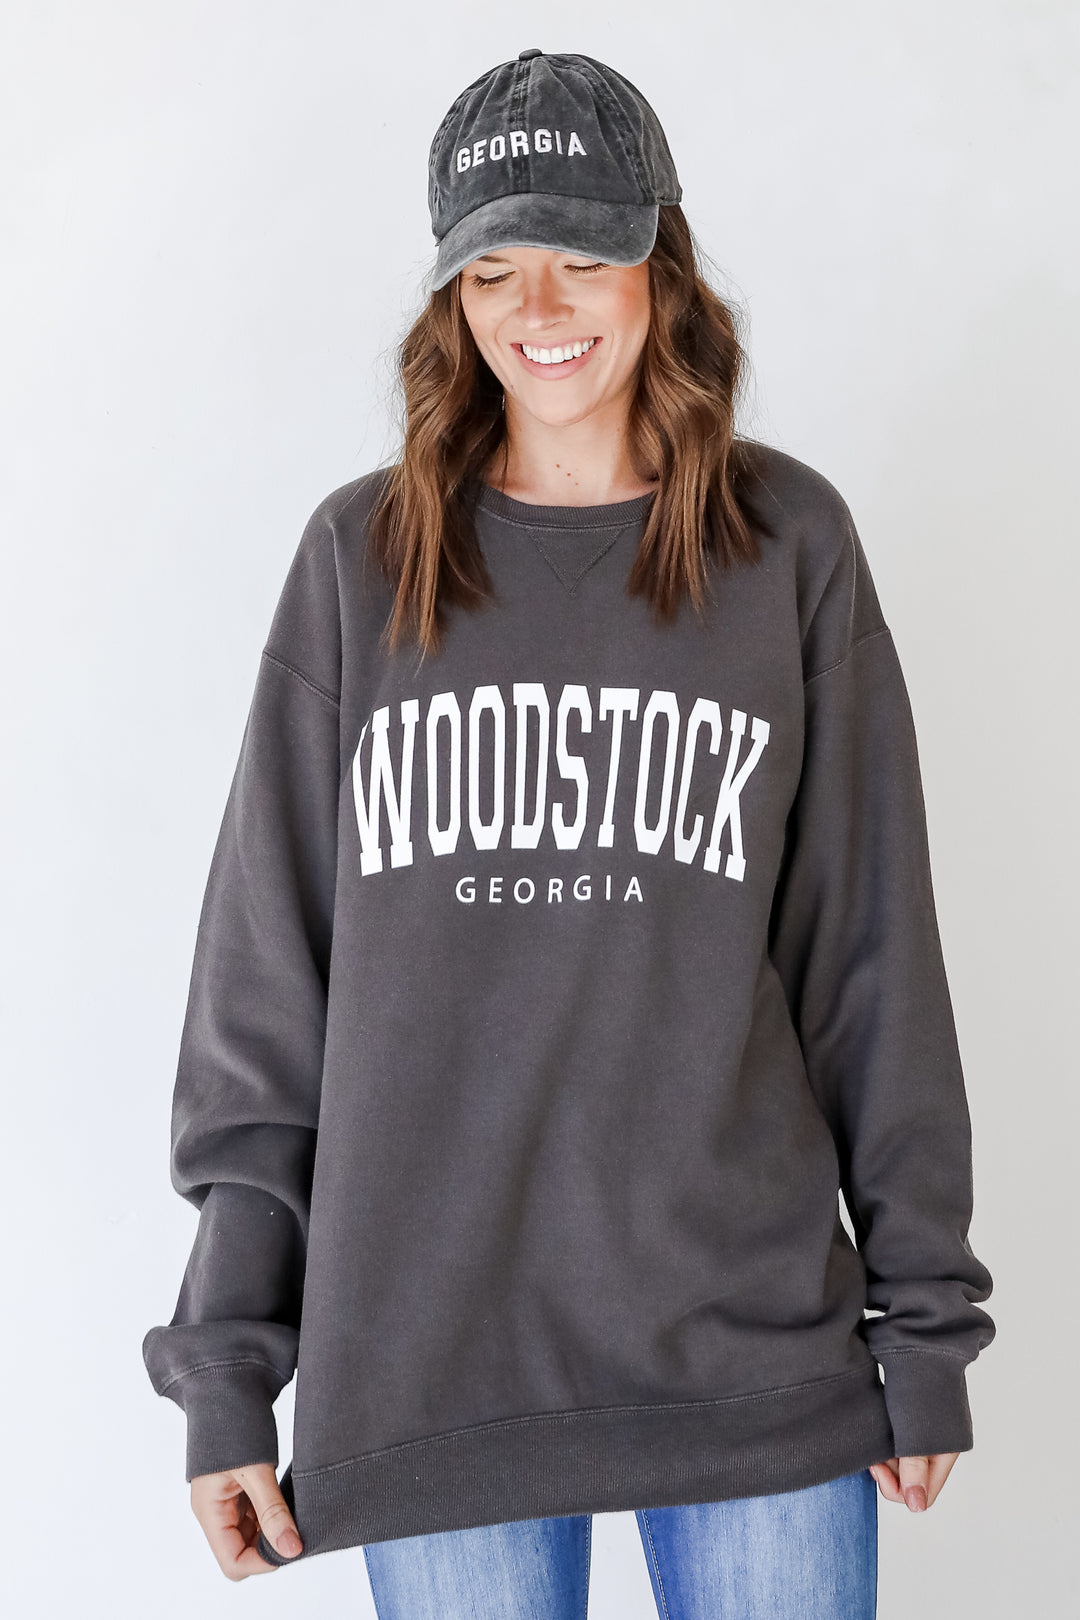 Woodstock Georgia Pullover. Graphic Sweatshirt, comfy, oversized, woodstock sweatshirt 